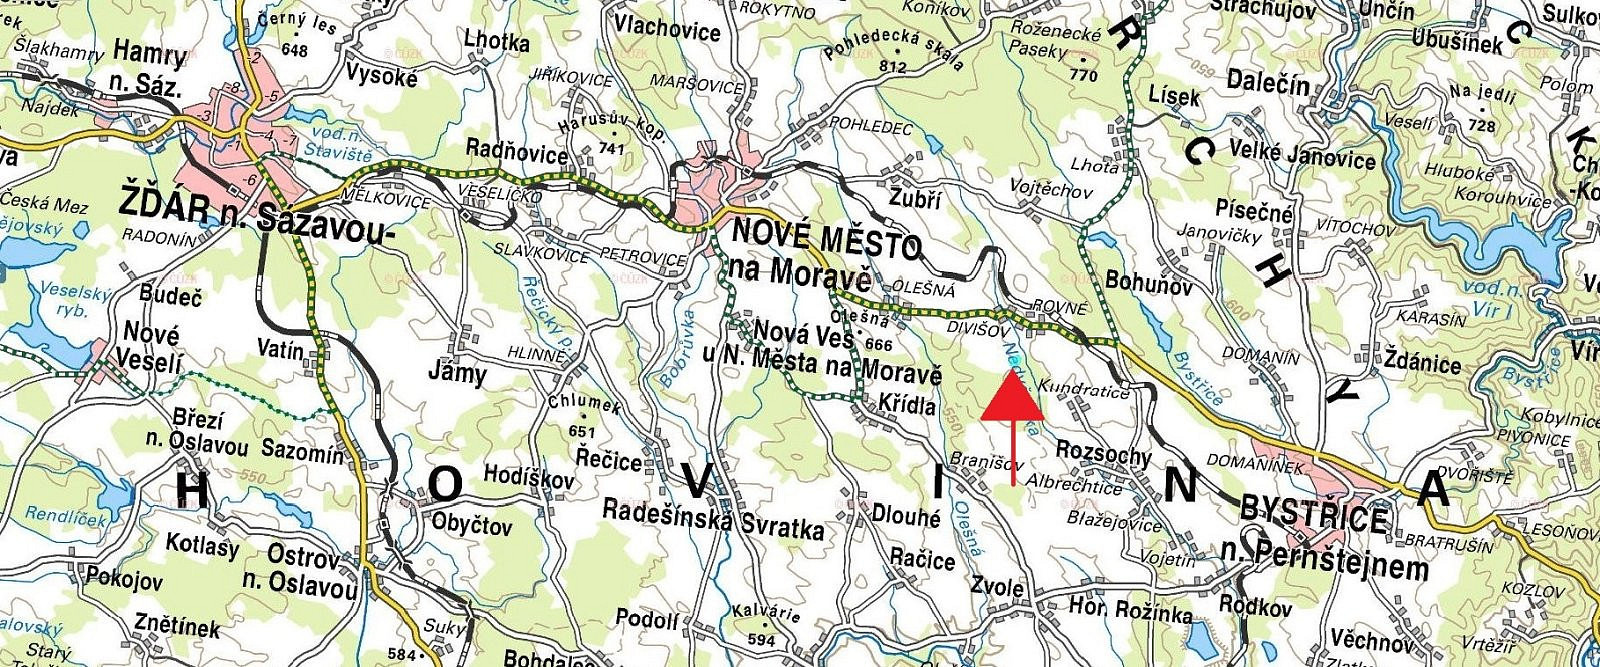 Bystřice nad Pernštejnem - Divišov, okres Žďár nad Sázavou